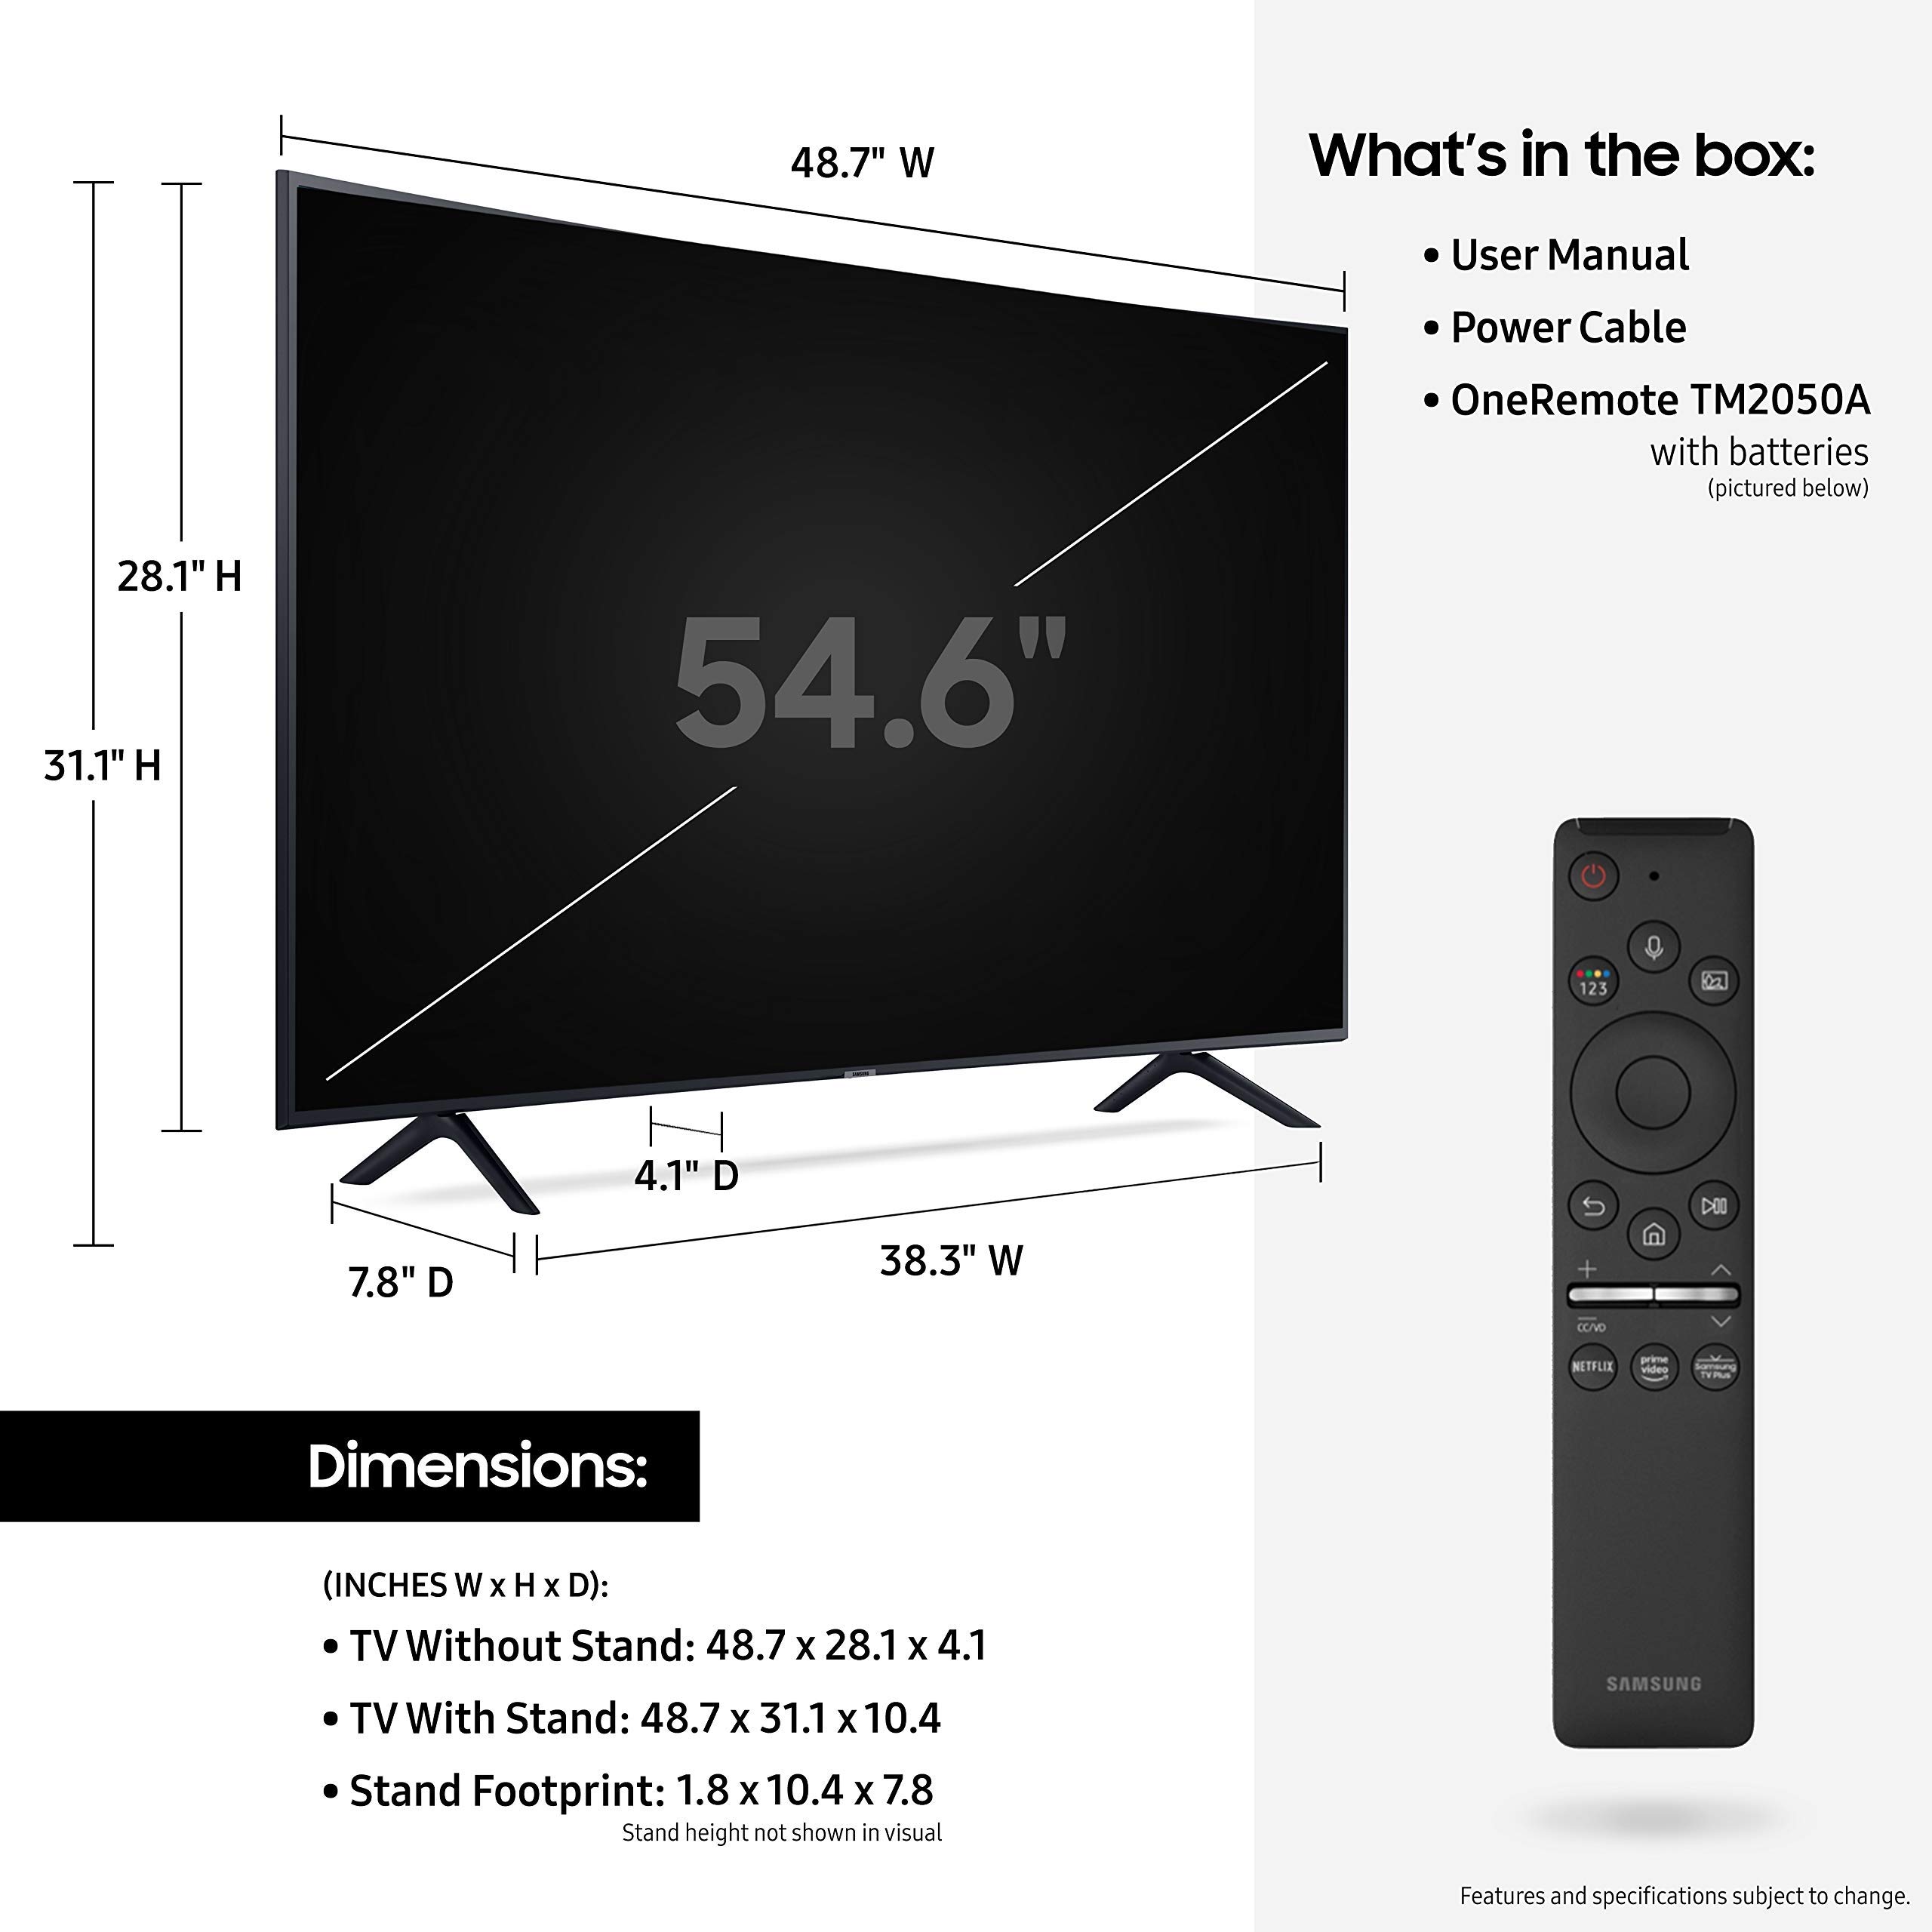 SAMSUNG 55-inch Class Curved UHD TU-8300 Series - 4K UHD HDR Smart TV With Alexa Built-in (UN55TU8300FXZA, 2020 Model) (Renewed)